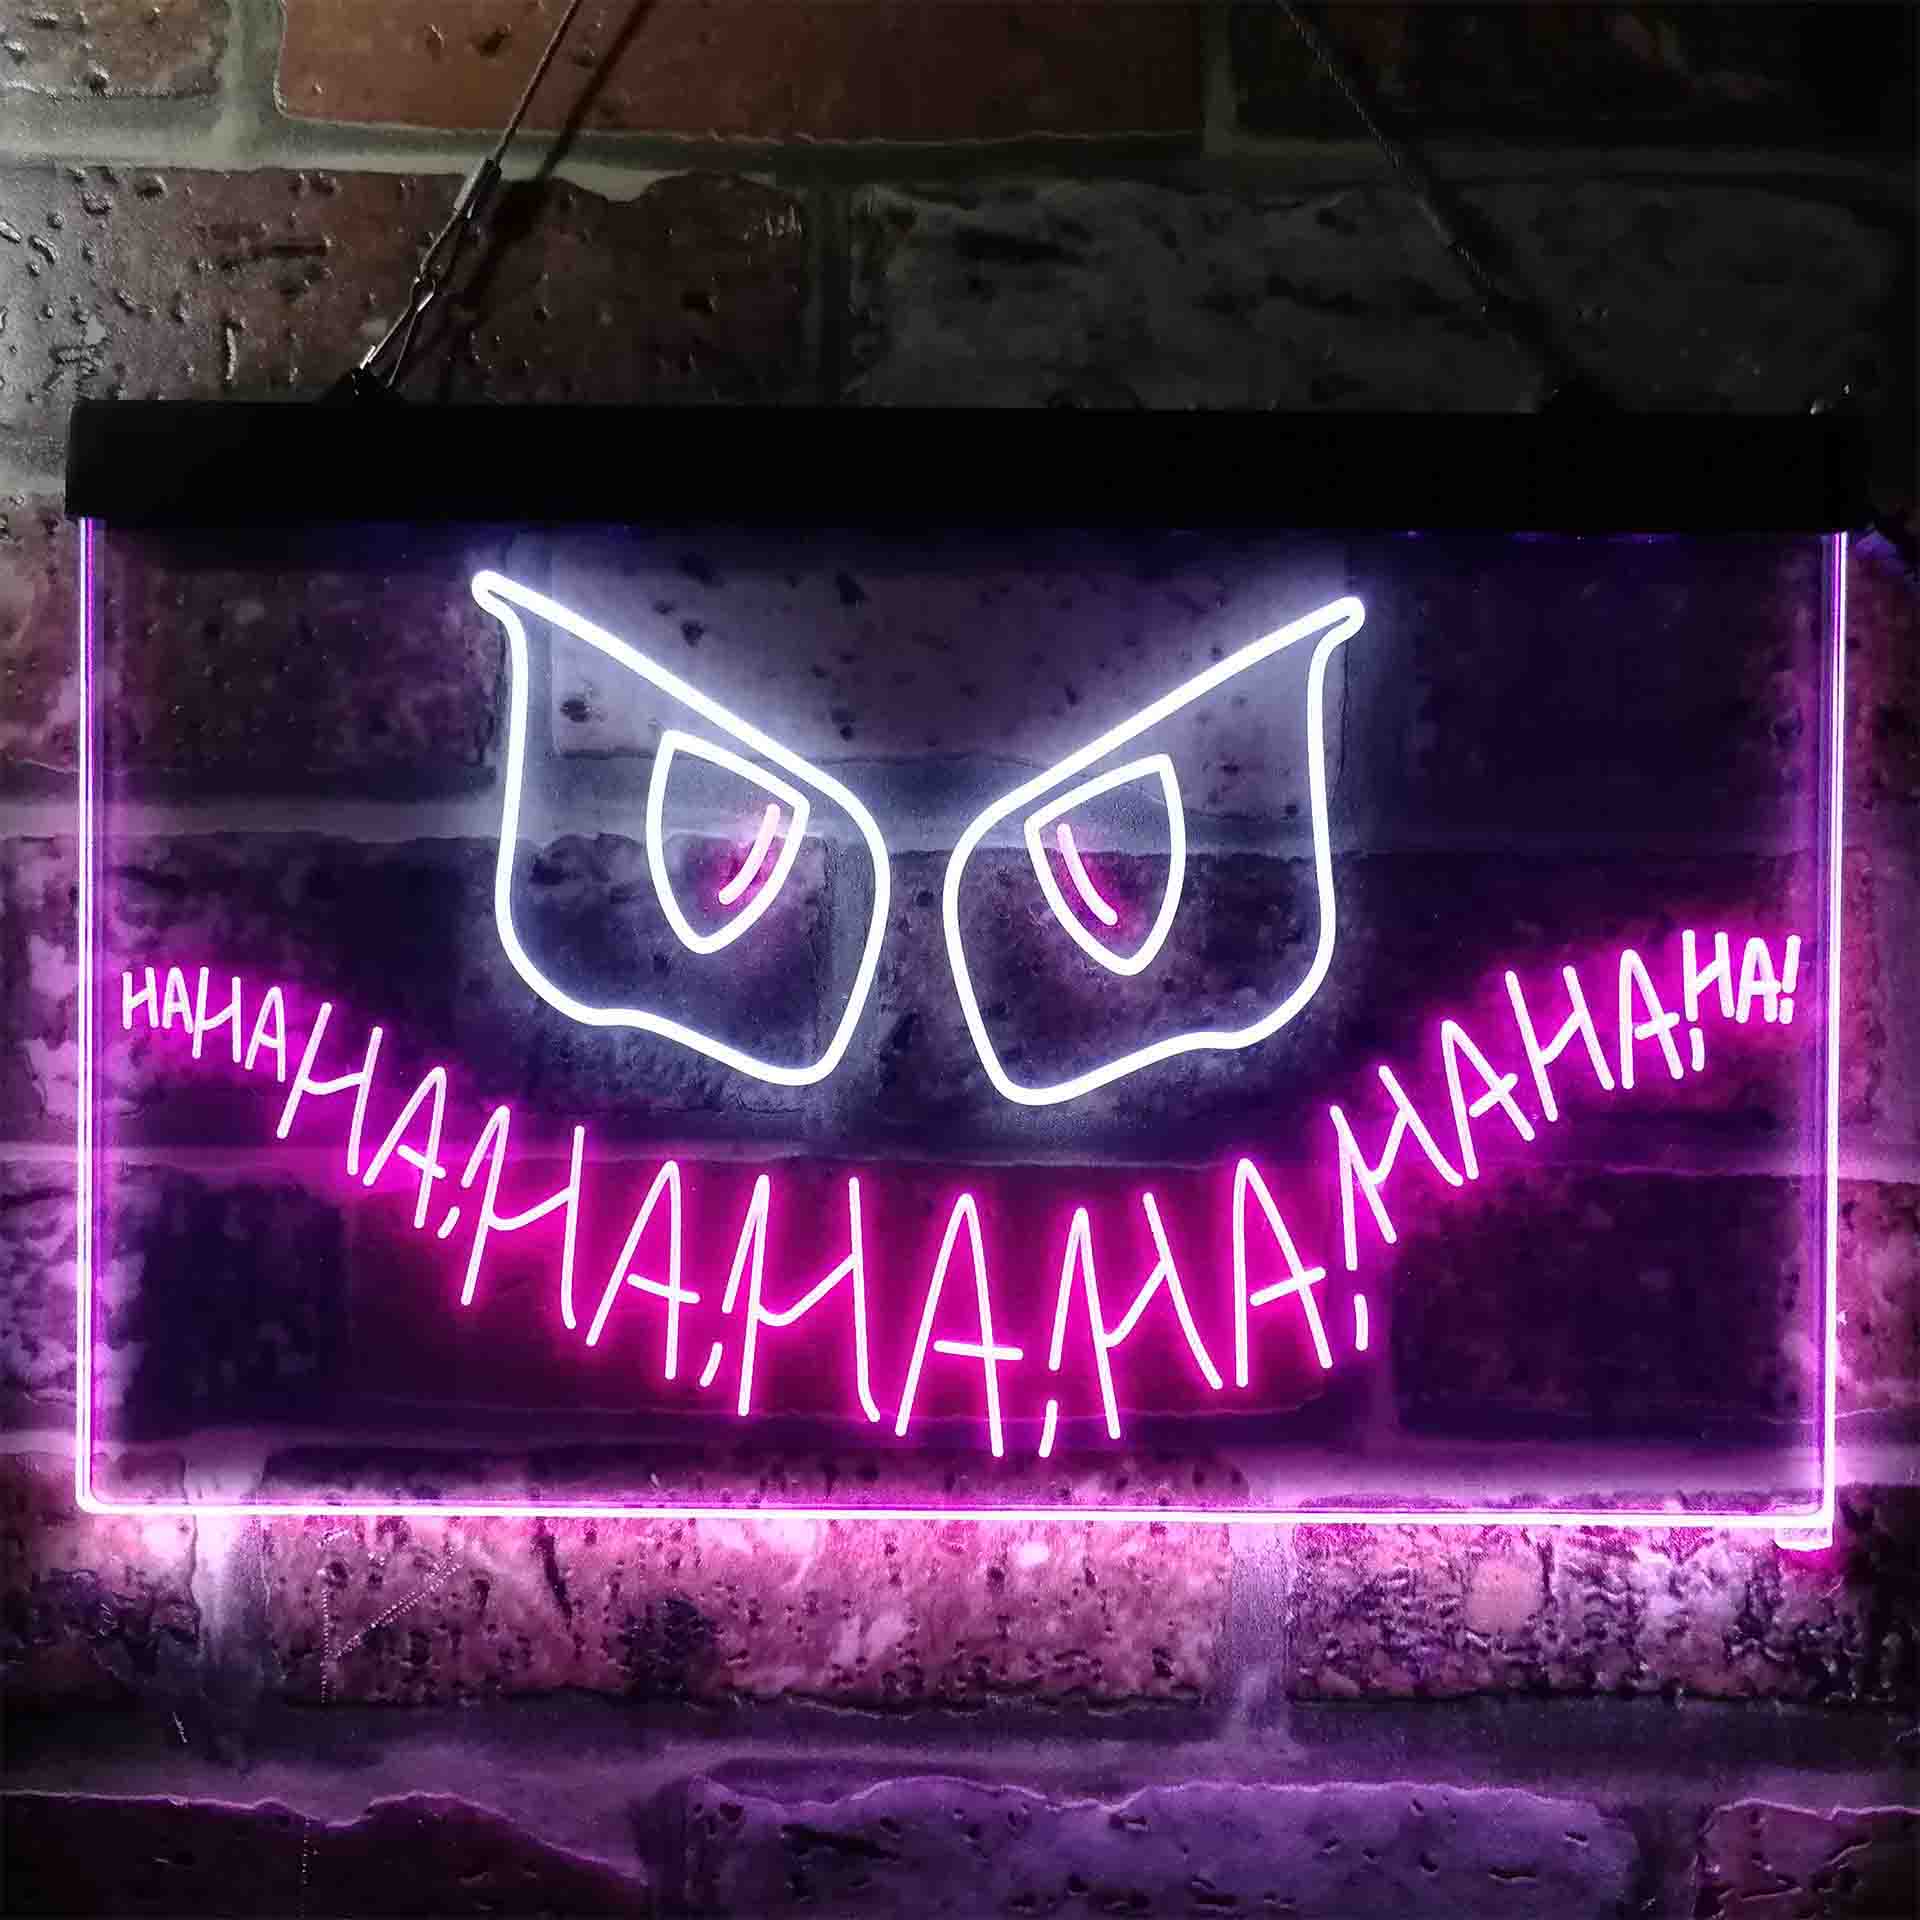 Joker Gotham Jerome Jeremiah Hahaha Graffiti Neon Sign - LED LAB CAVE